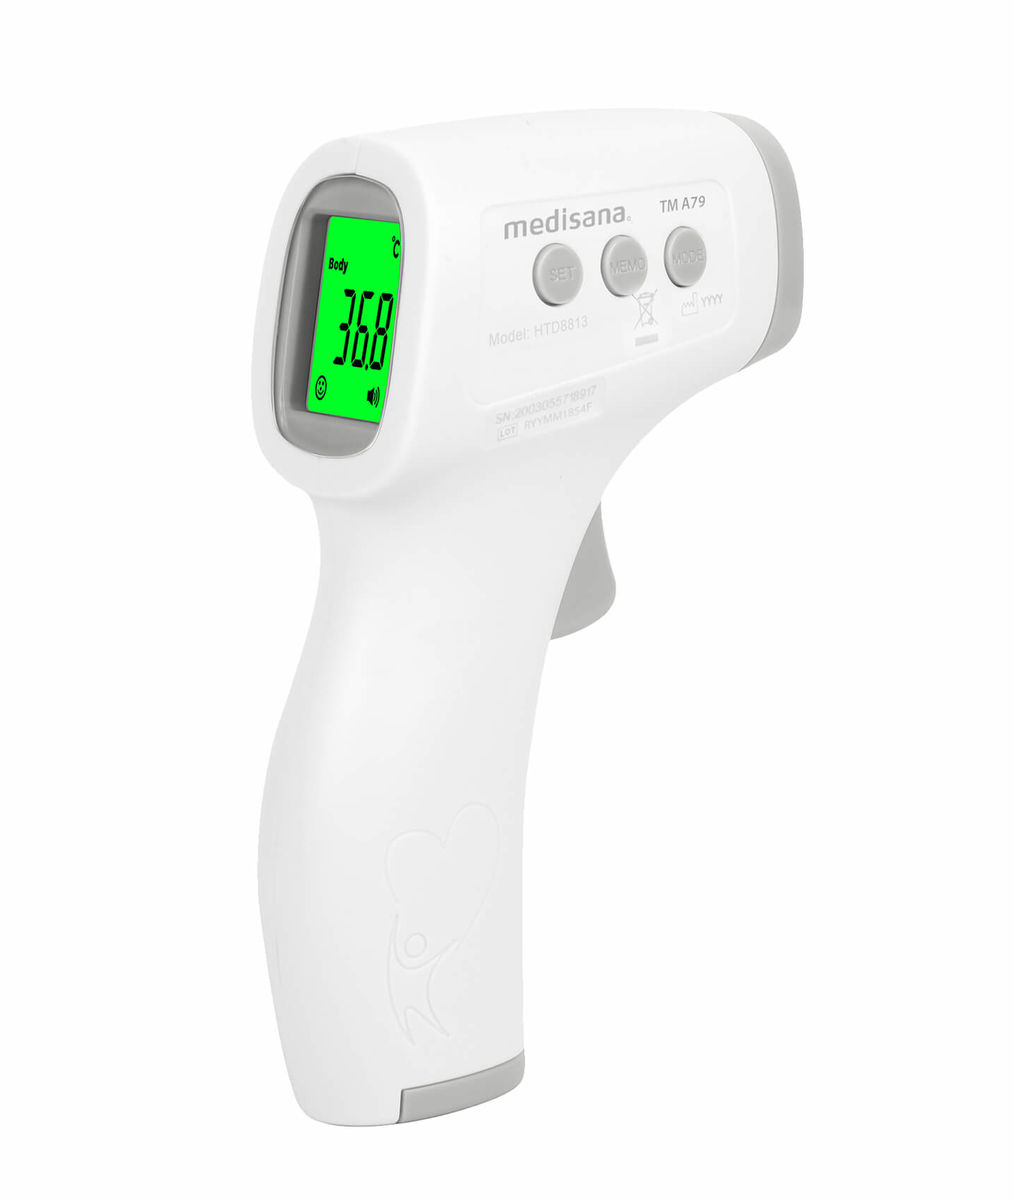 Image of Medisana TM A79 Fieberthermometer bei nettoshop.ch